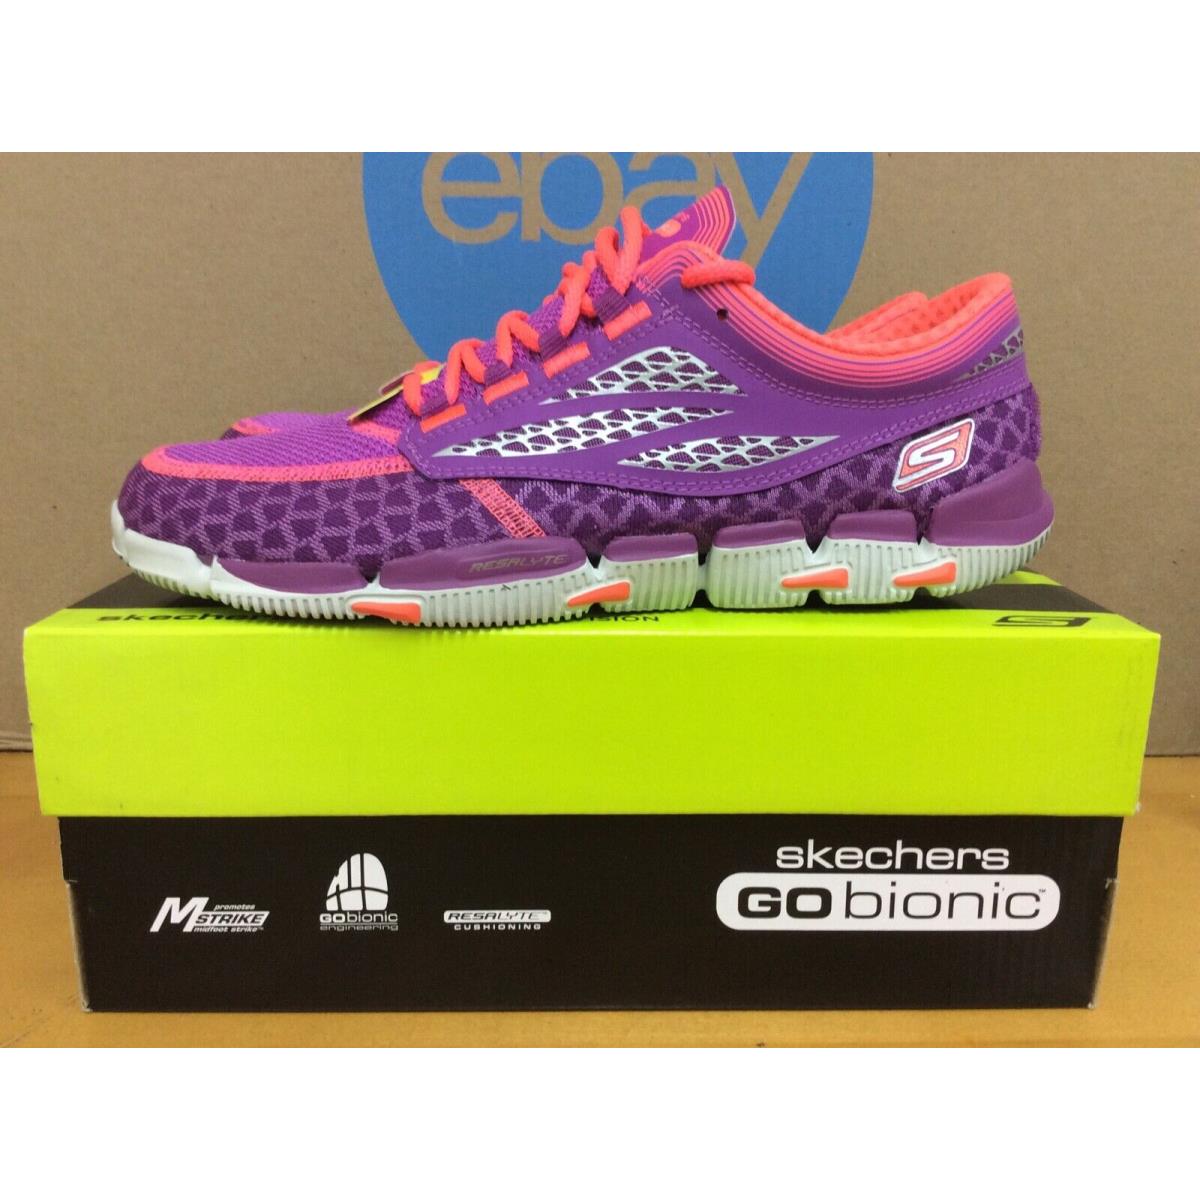 Skechers Go Bionic Prana Womens Running Shoes Size 6.5 Purple Hot Pink E3